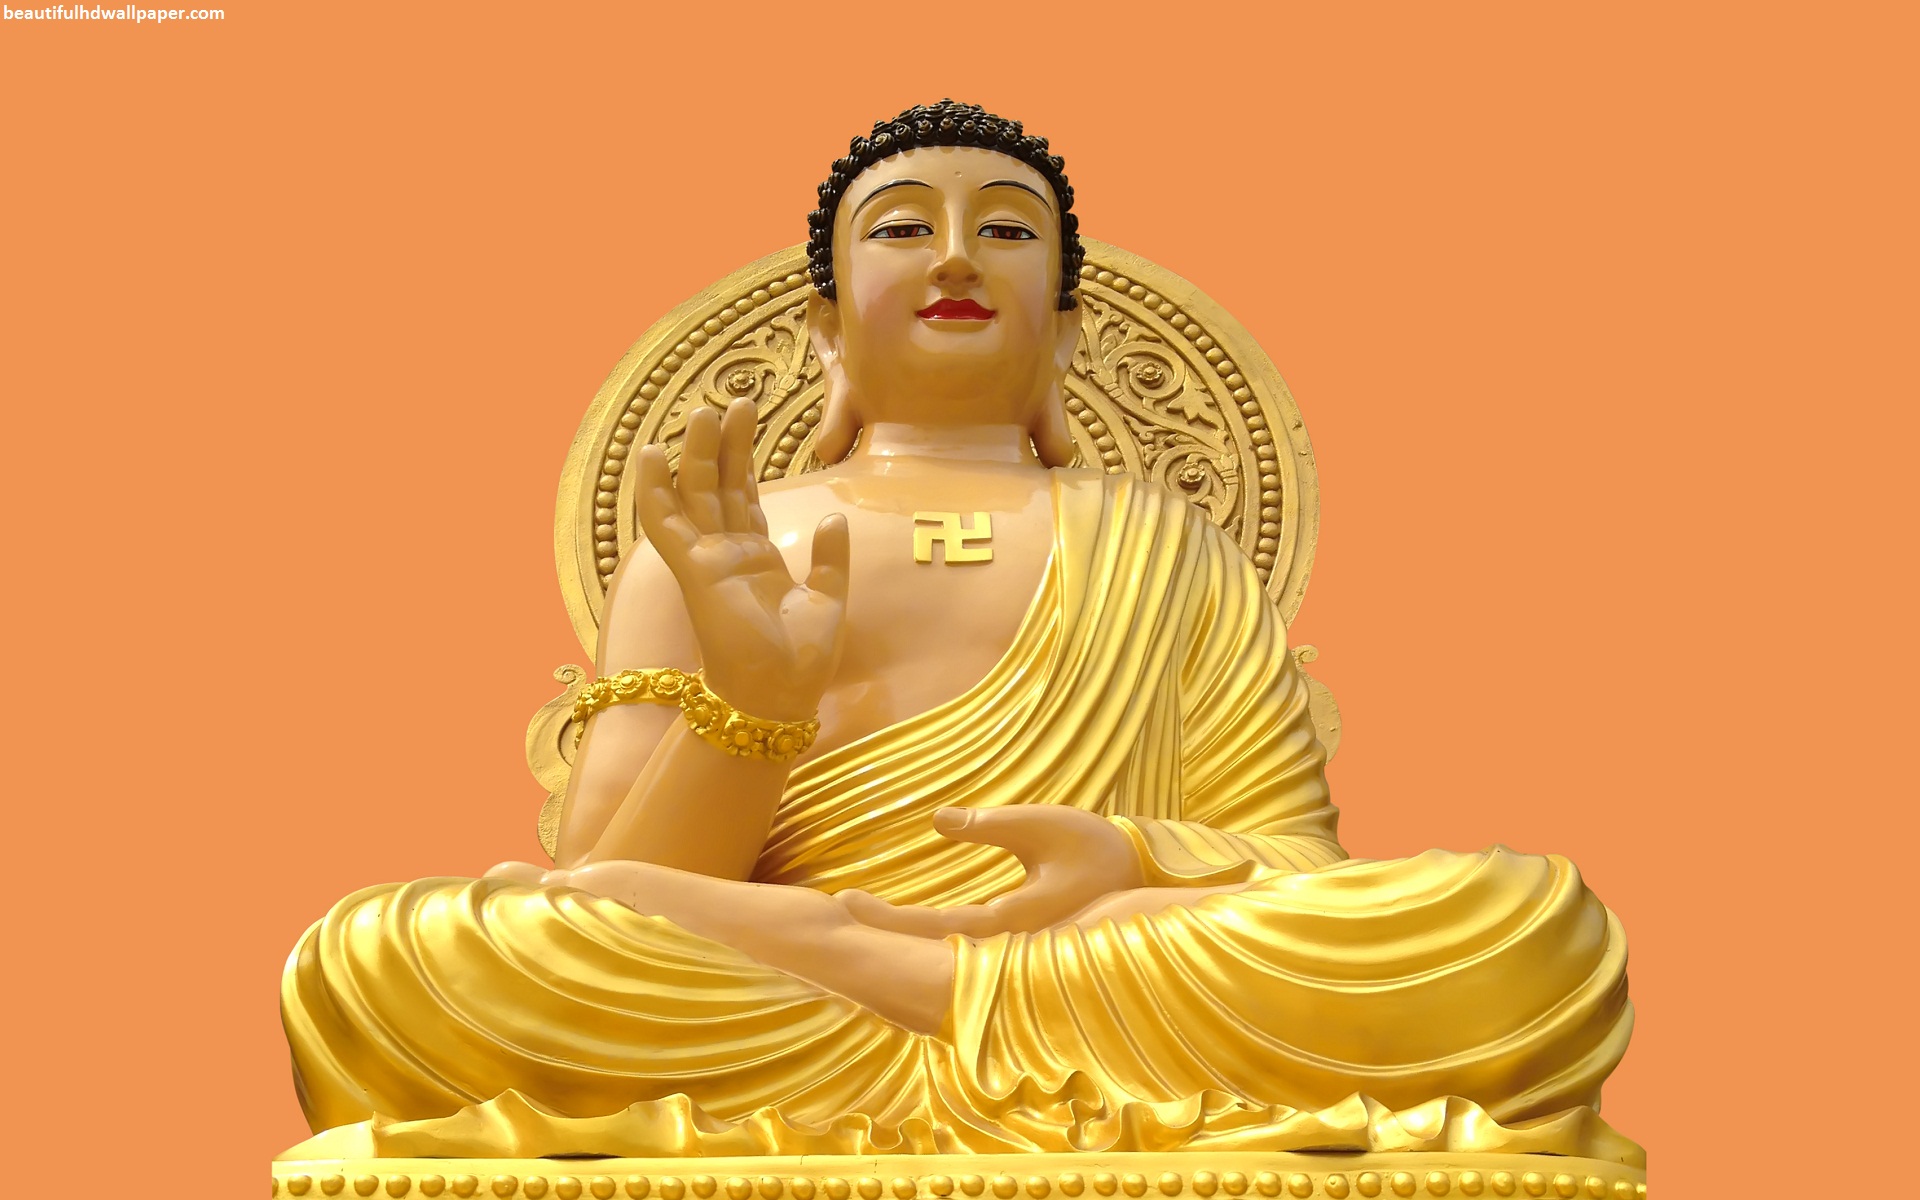 Gautam buddha. Research paper Writing Service qtessayvuwi ...